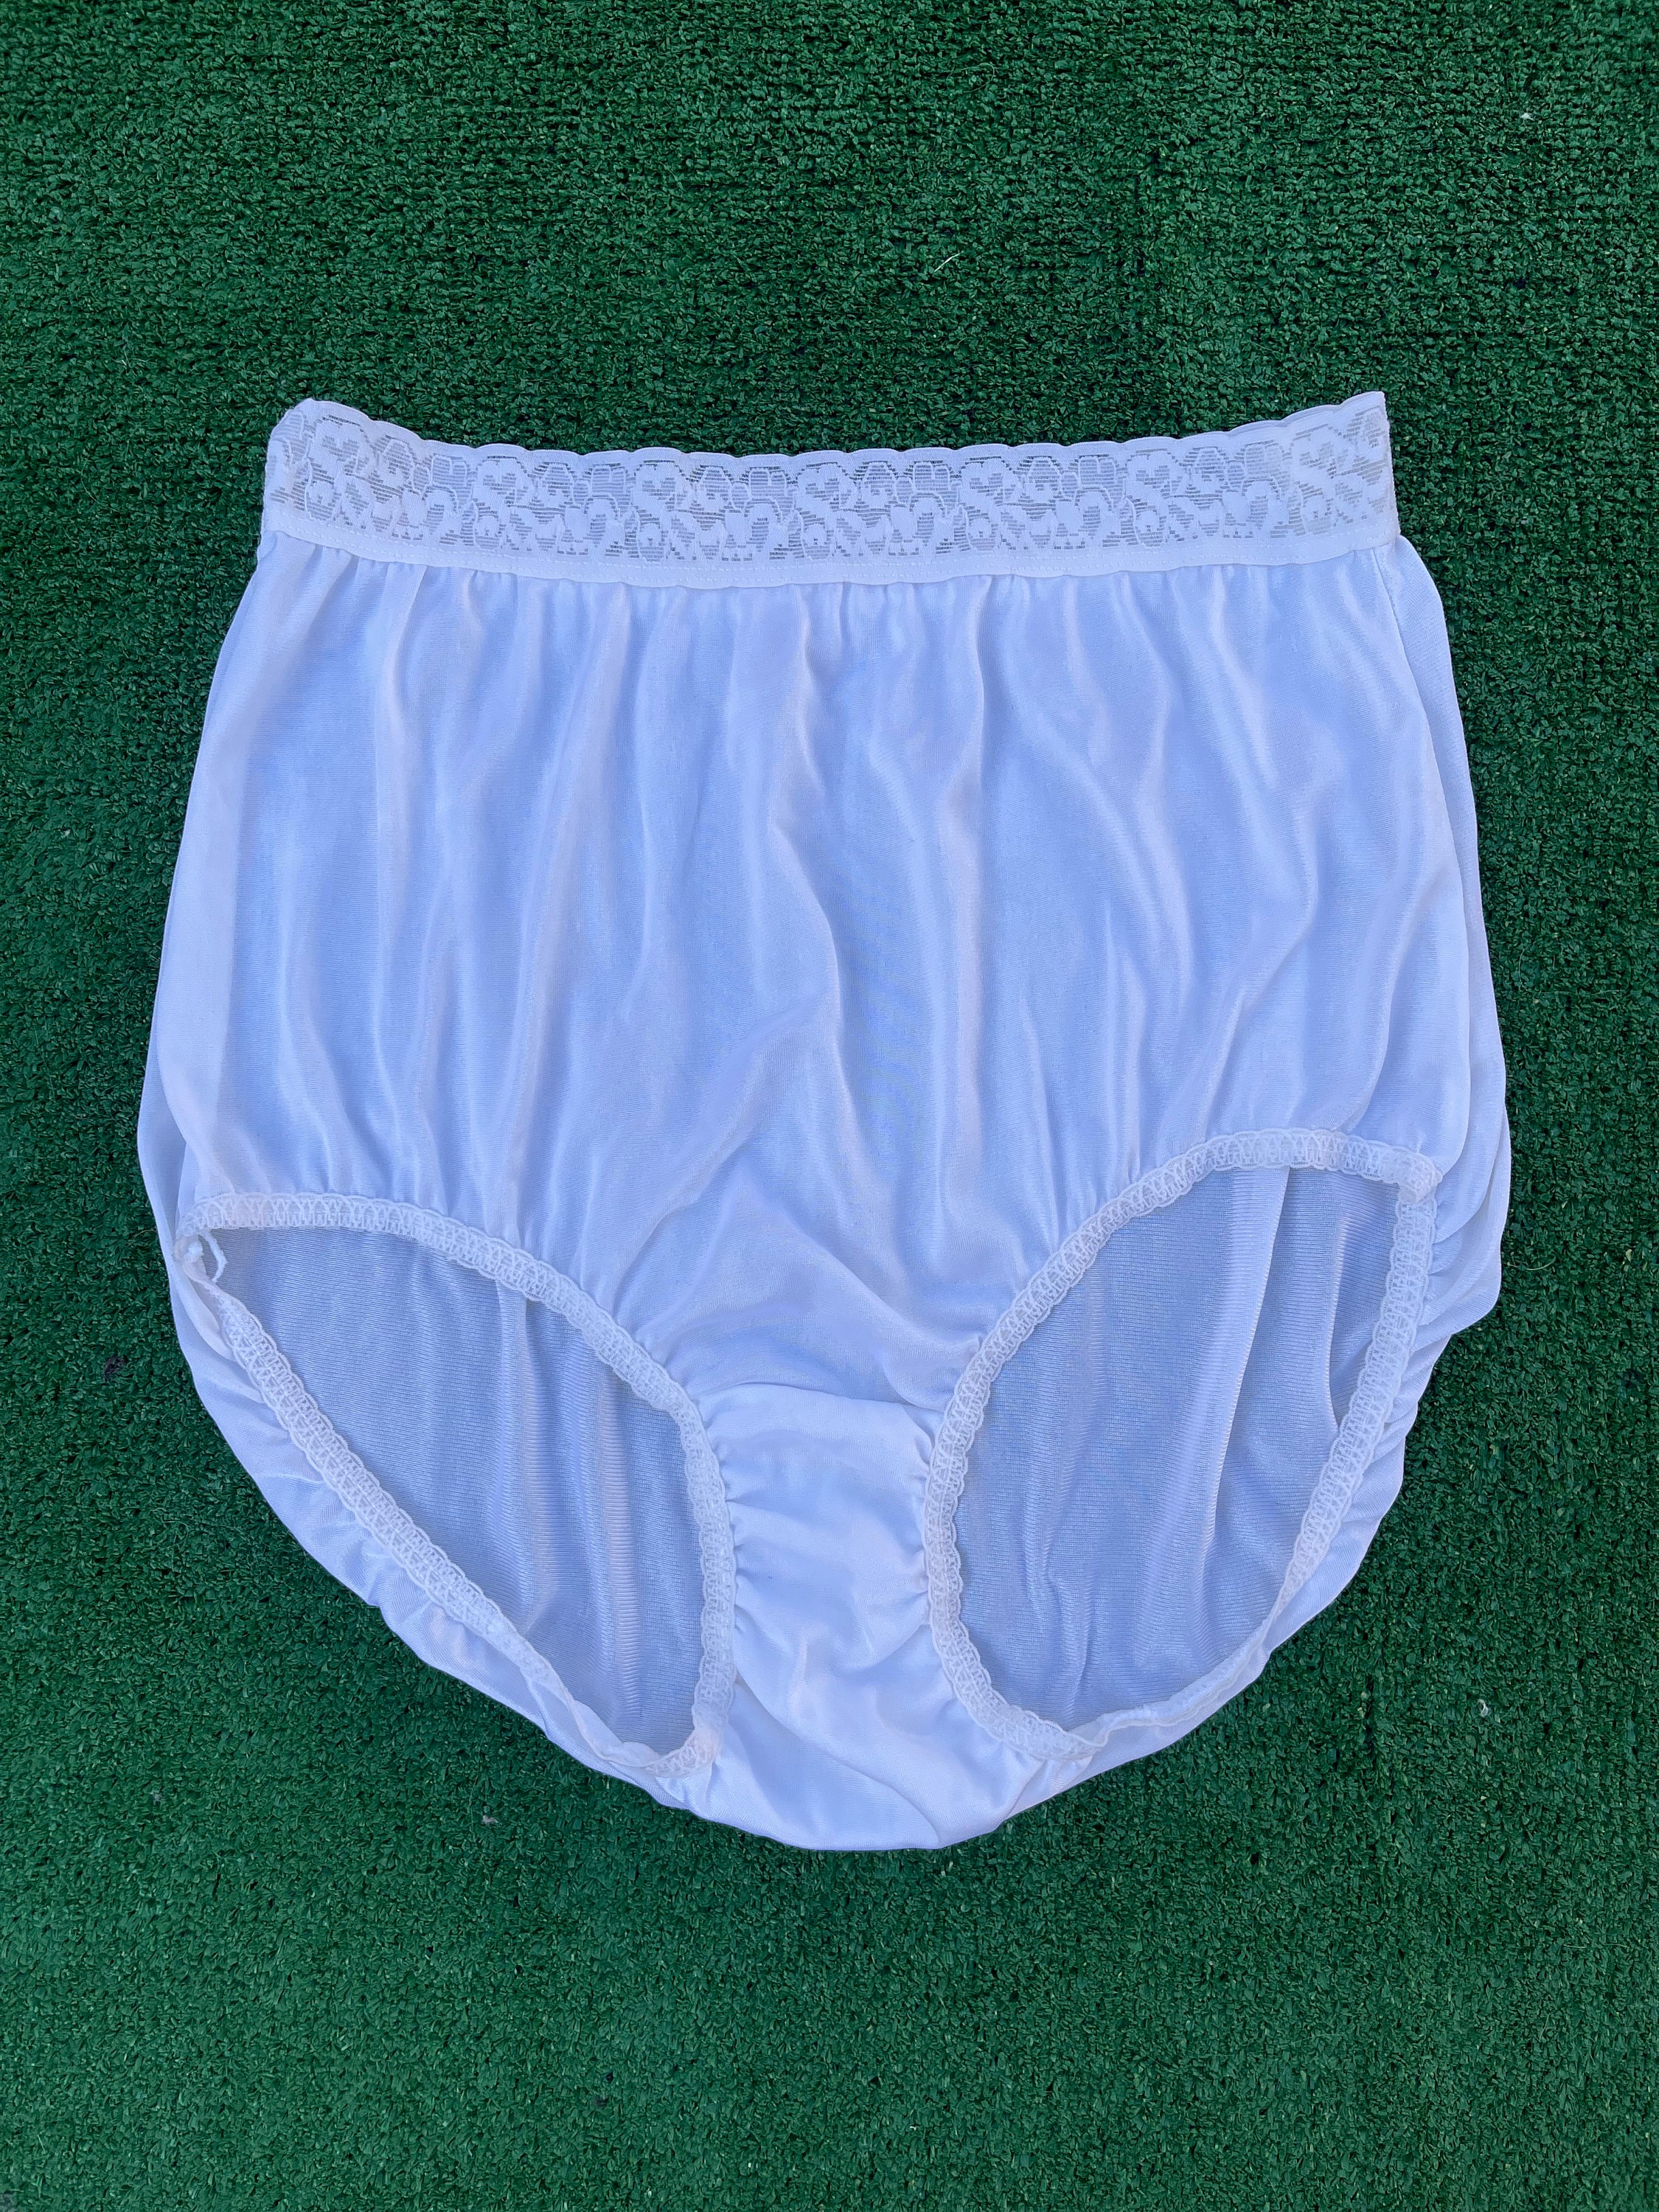 Vintage Hanes White Nylon Granny Panty Underwear, Women's Size Large